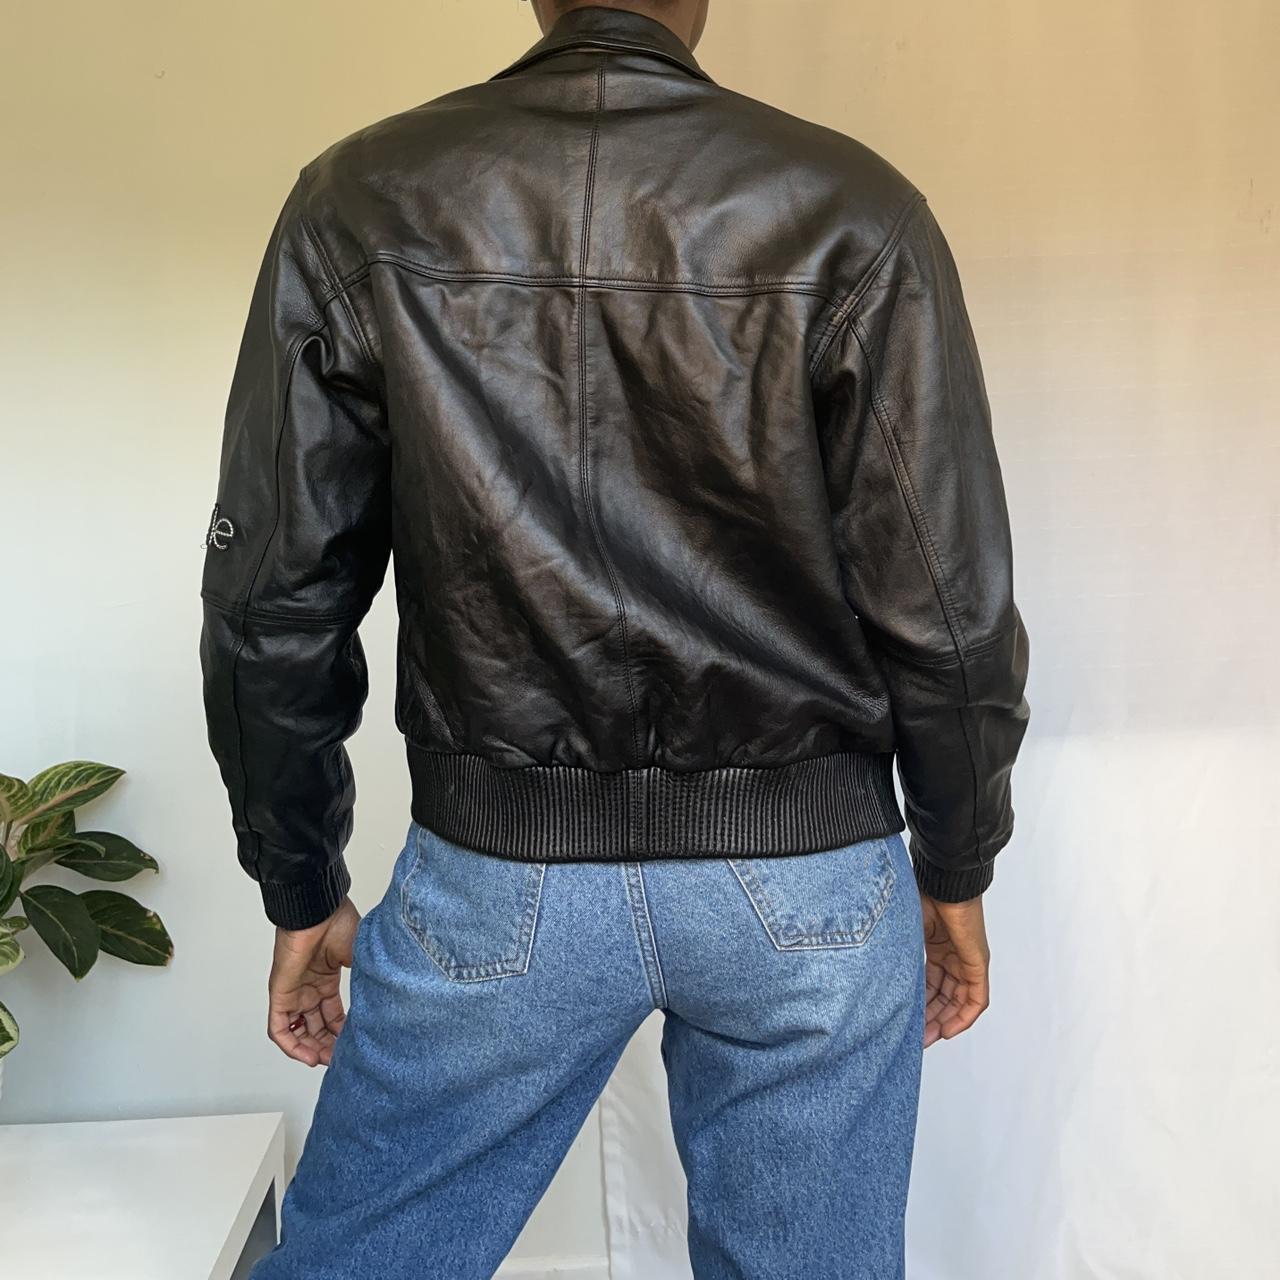 Product Image 4 - Vintage pellepelle black leather jacket
Size: